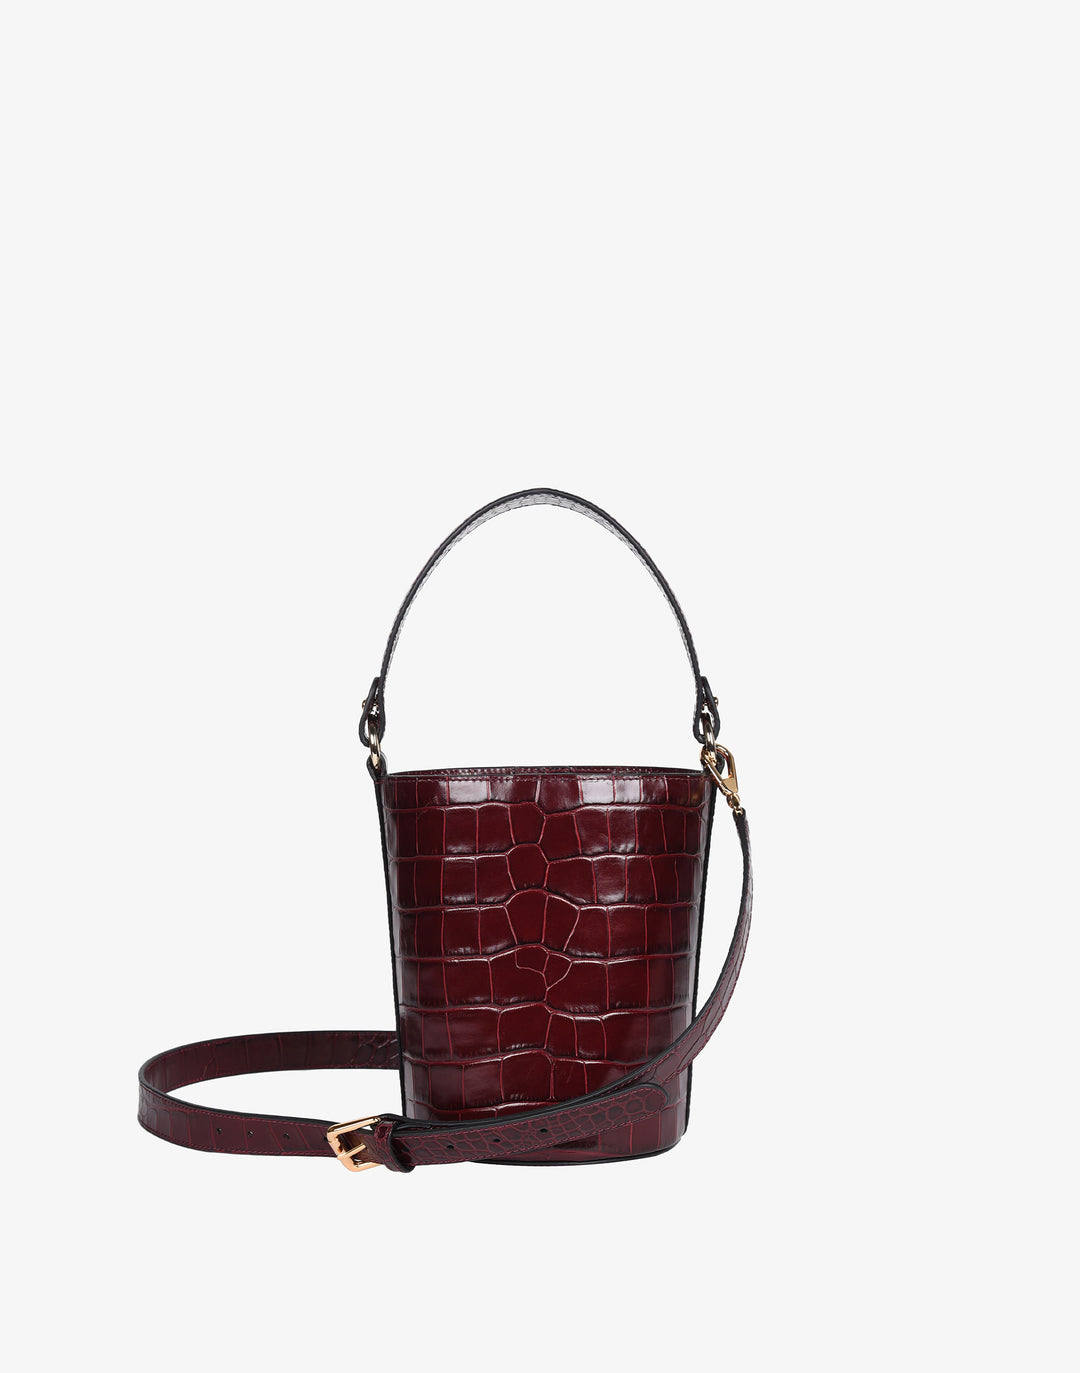 Burgundy croco-like leather handbag